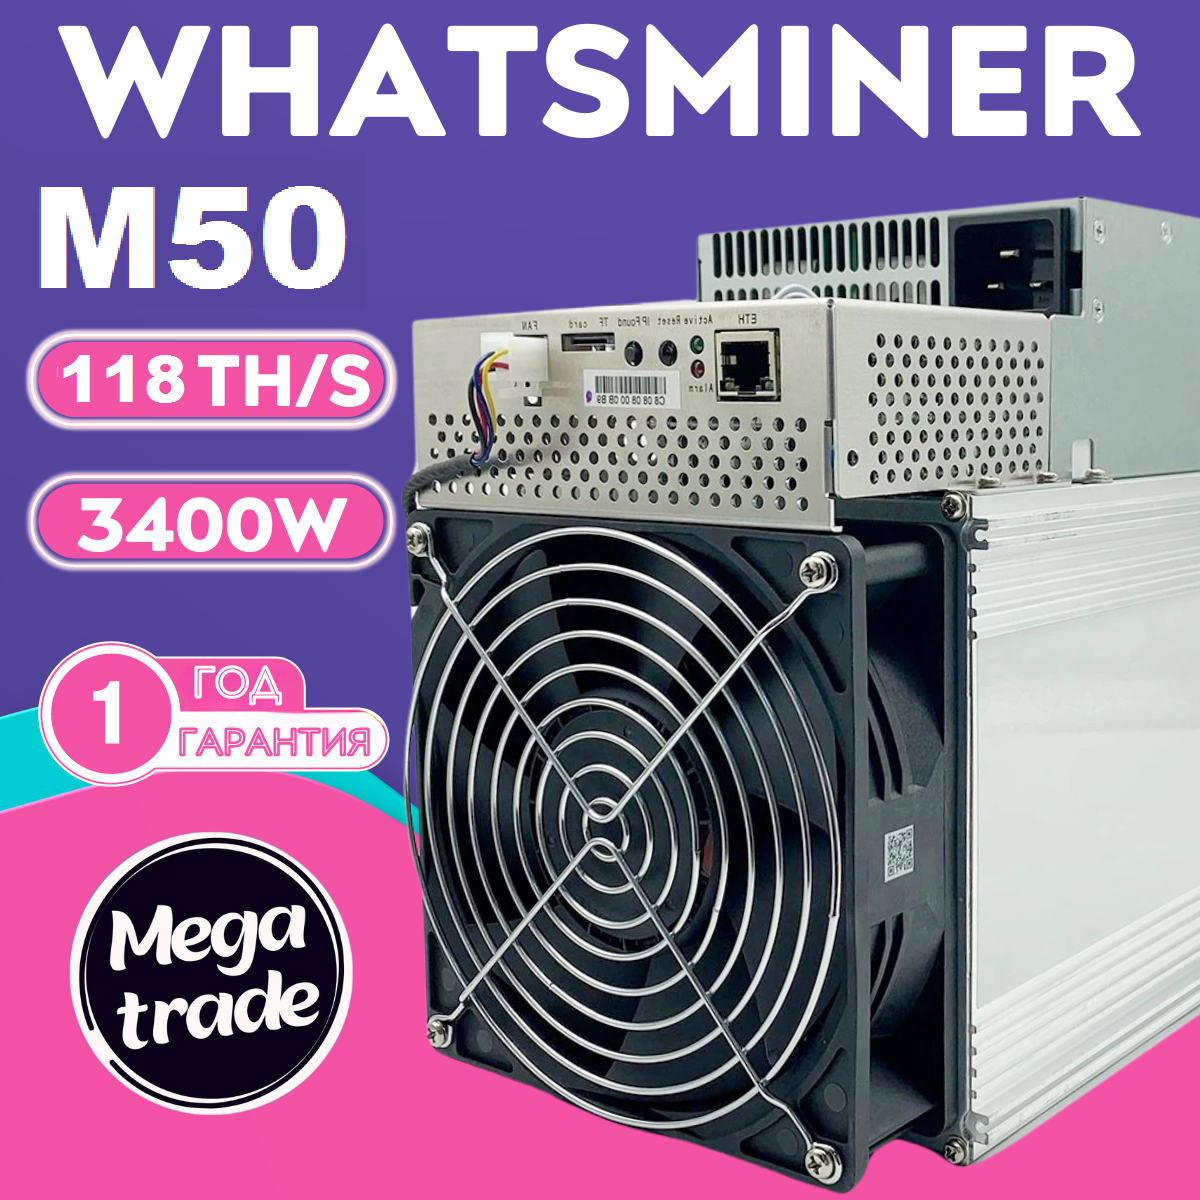 ASIC майнер Whatsminer M50 118TH/s